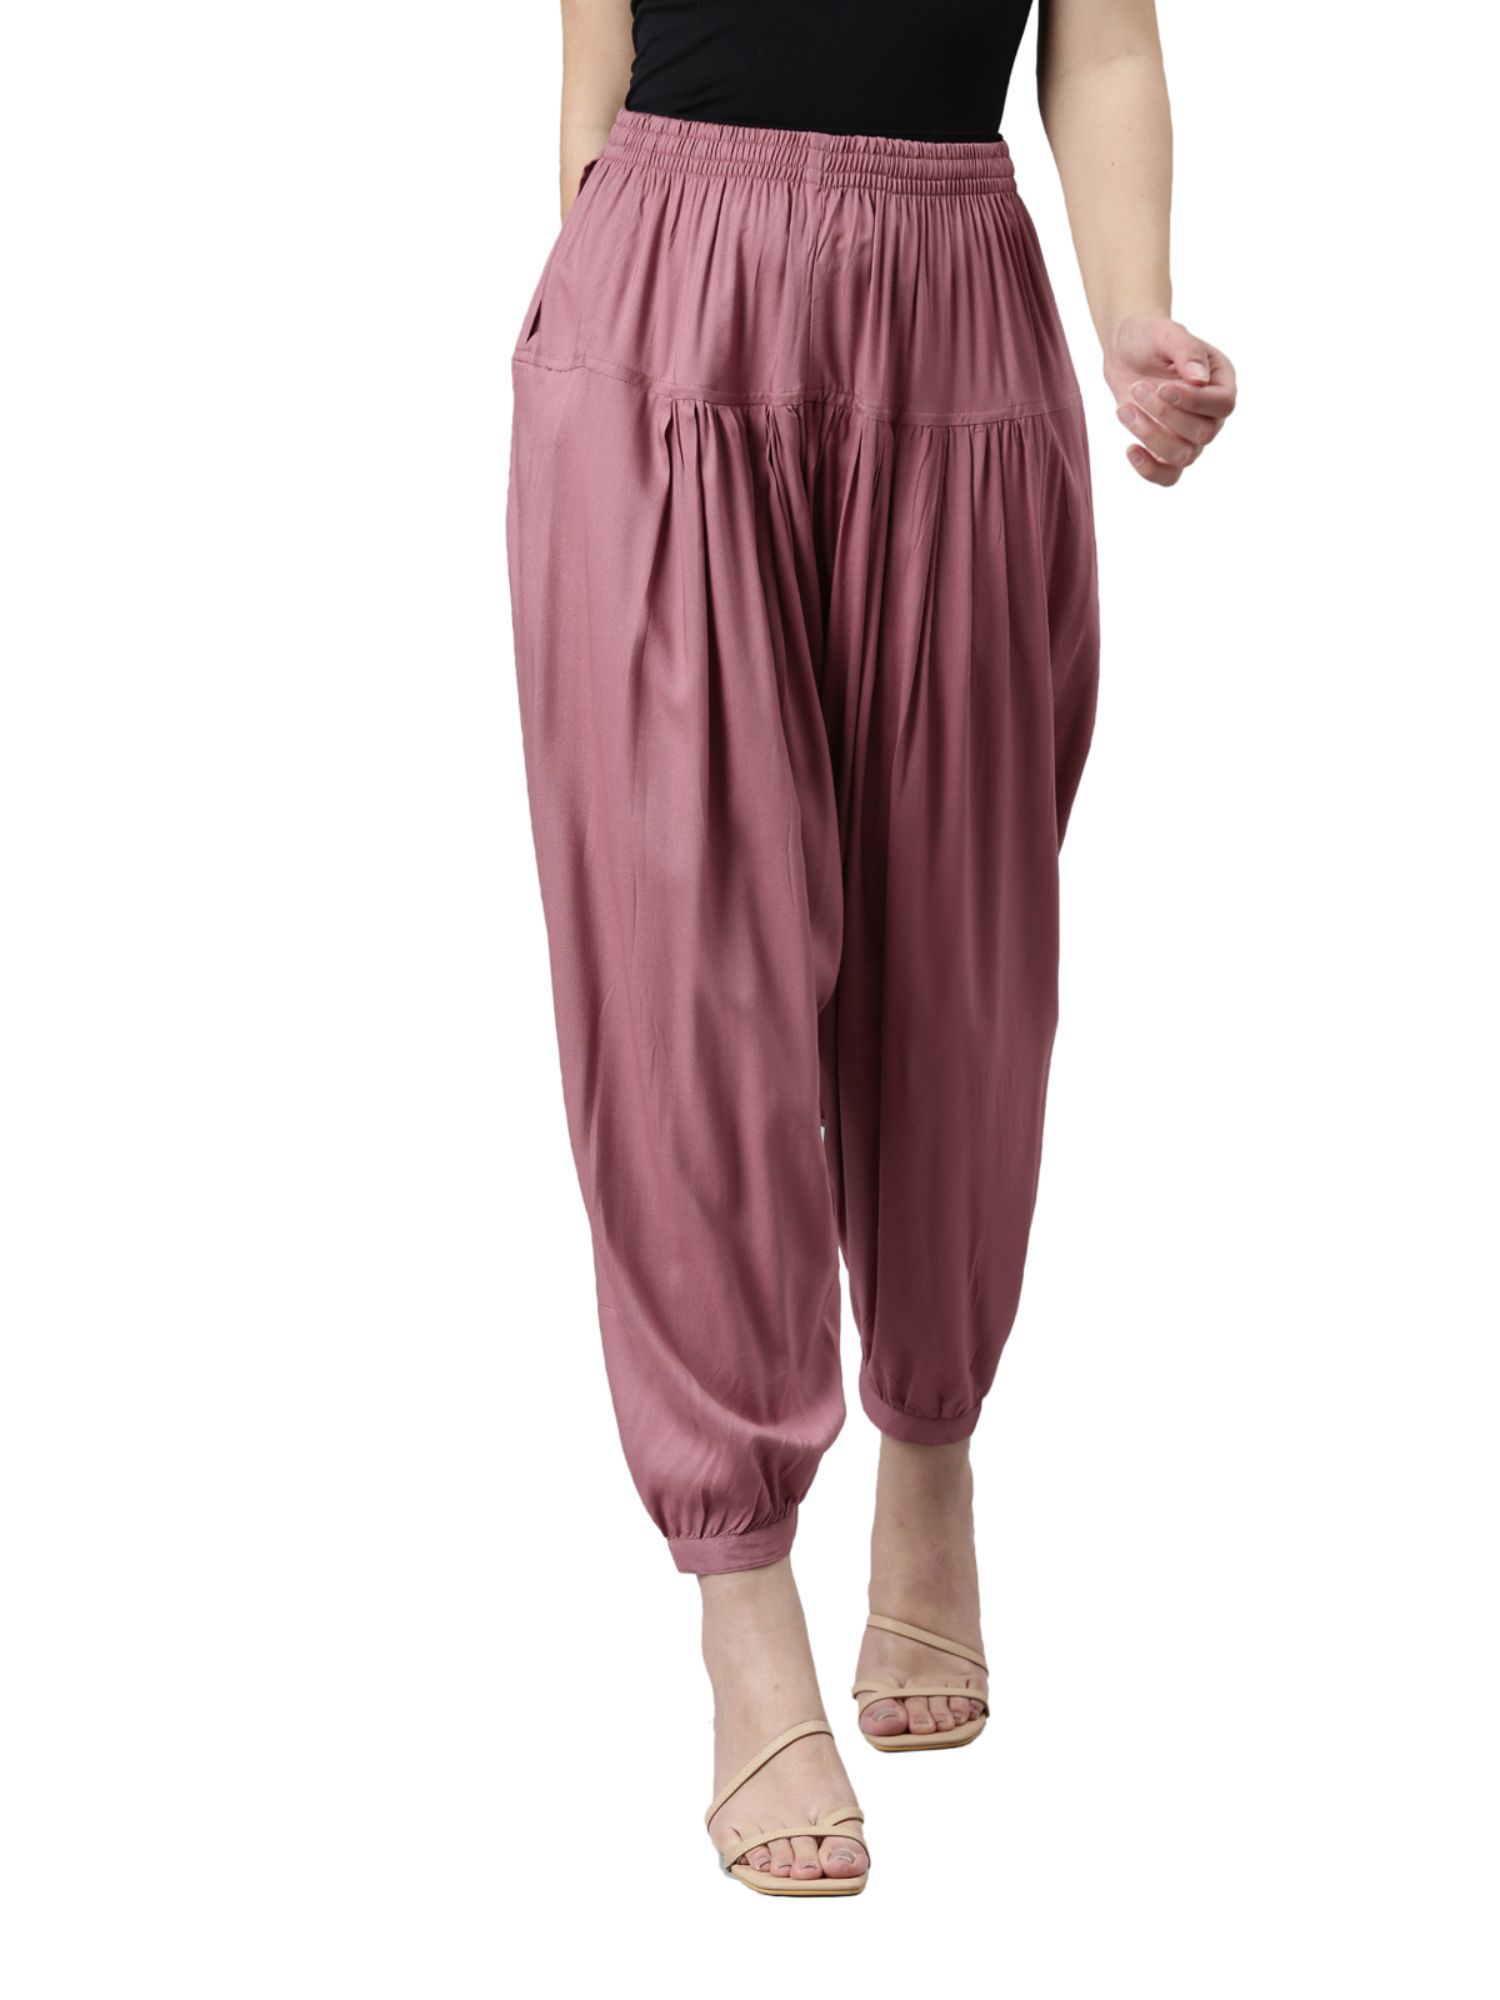 Buy Harem Pants / Yoga Pants / Drop Crotch Pants / Aladdin Pants / Online  in India - Etsy